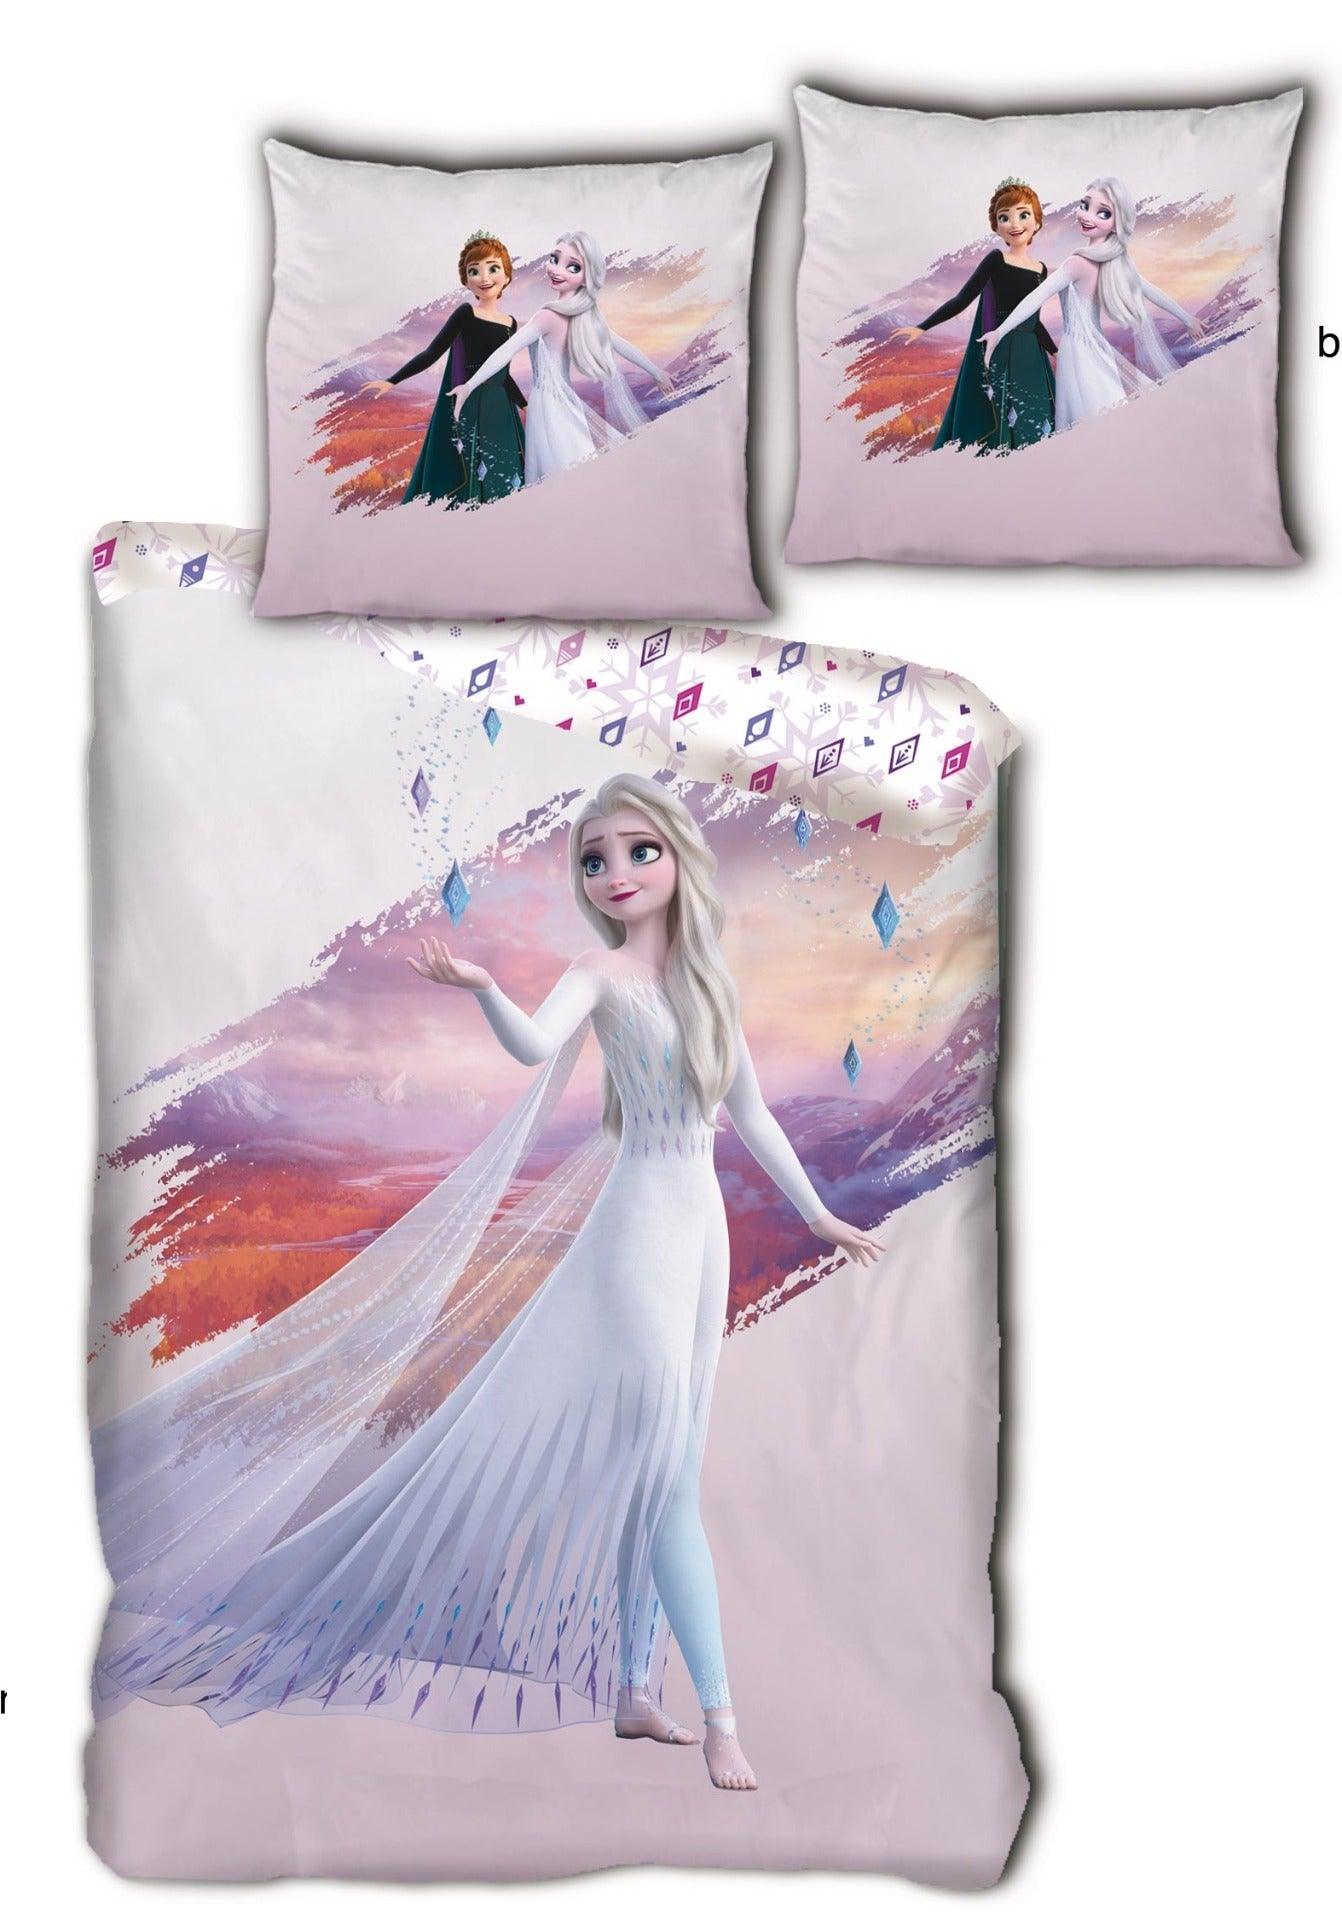 Textiel Trade - Textiel kids bedding quilt cover & pillow case disney frozen - Mari Kali Stores Cyprus